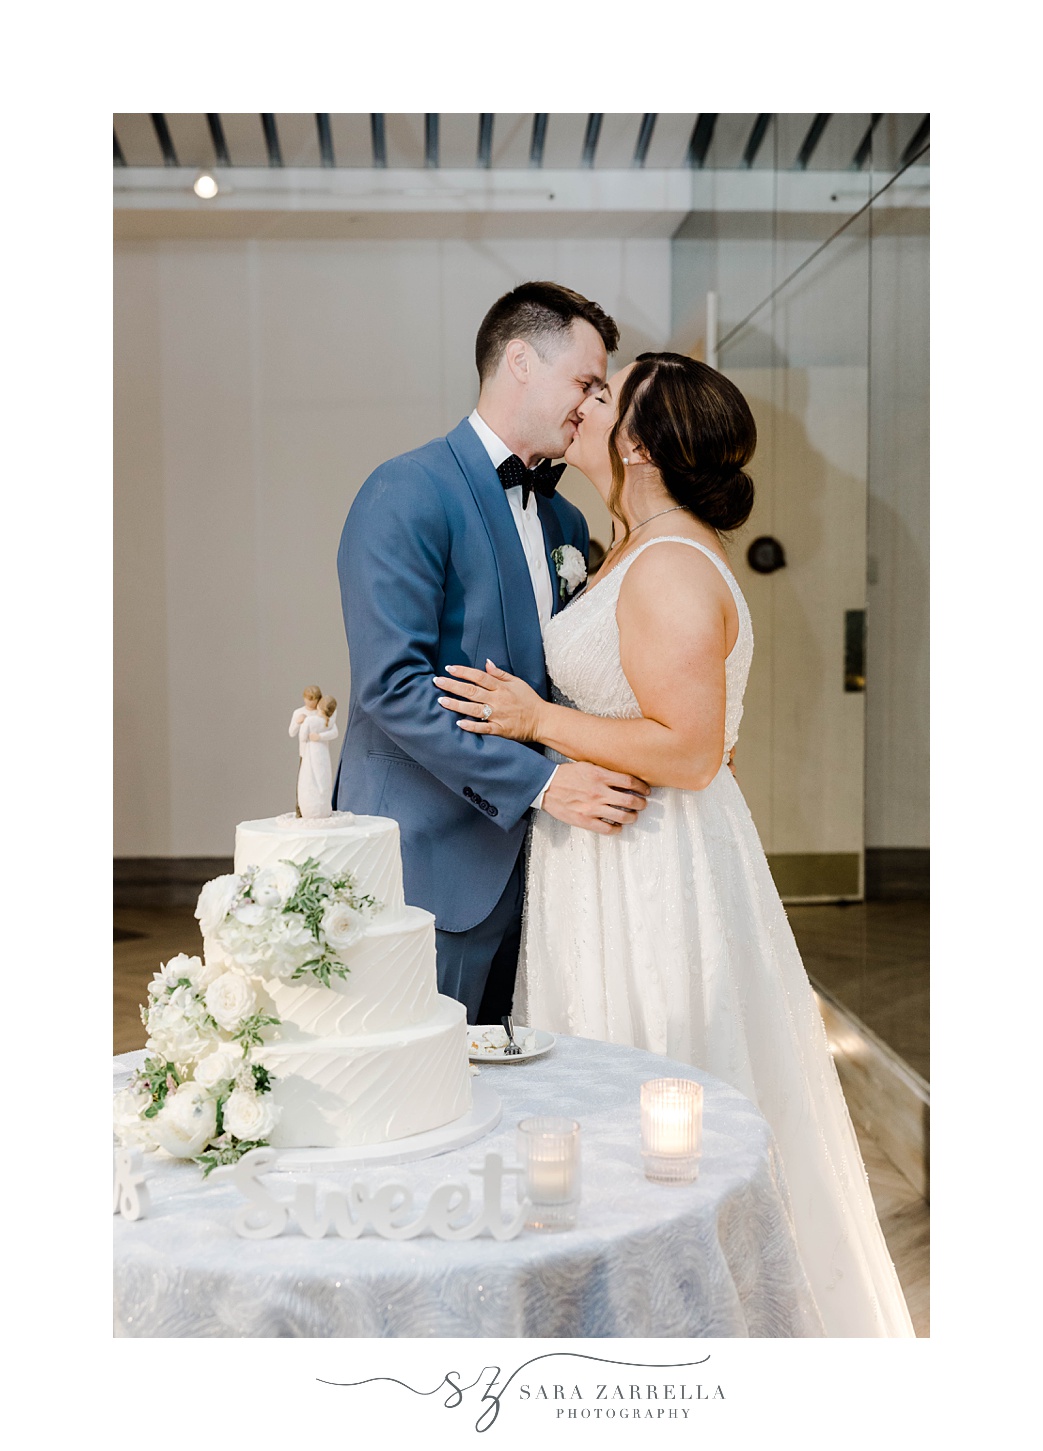 newlyweds kiss by tiered wedding cake during Newport RI wedding reception